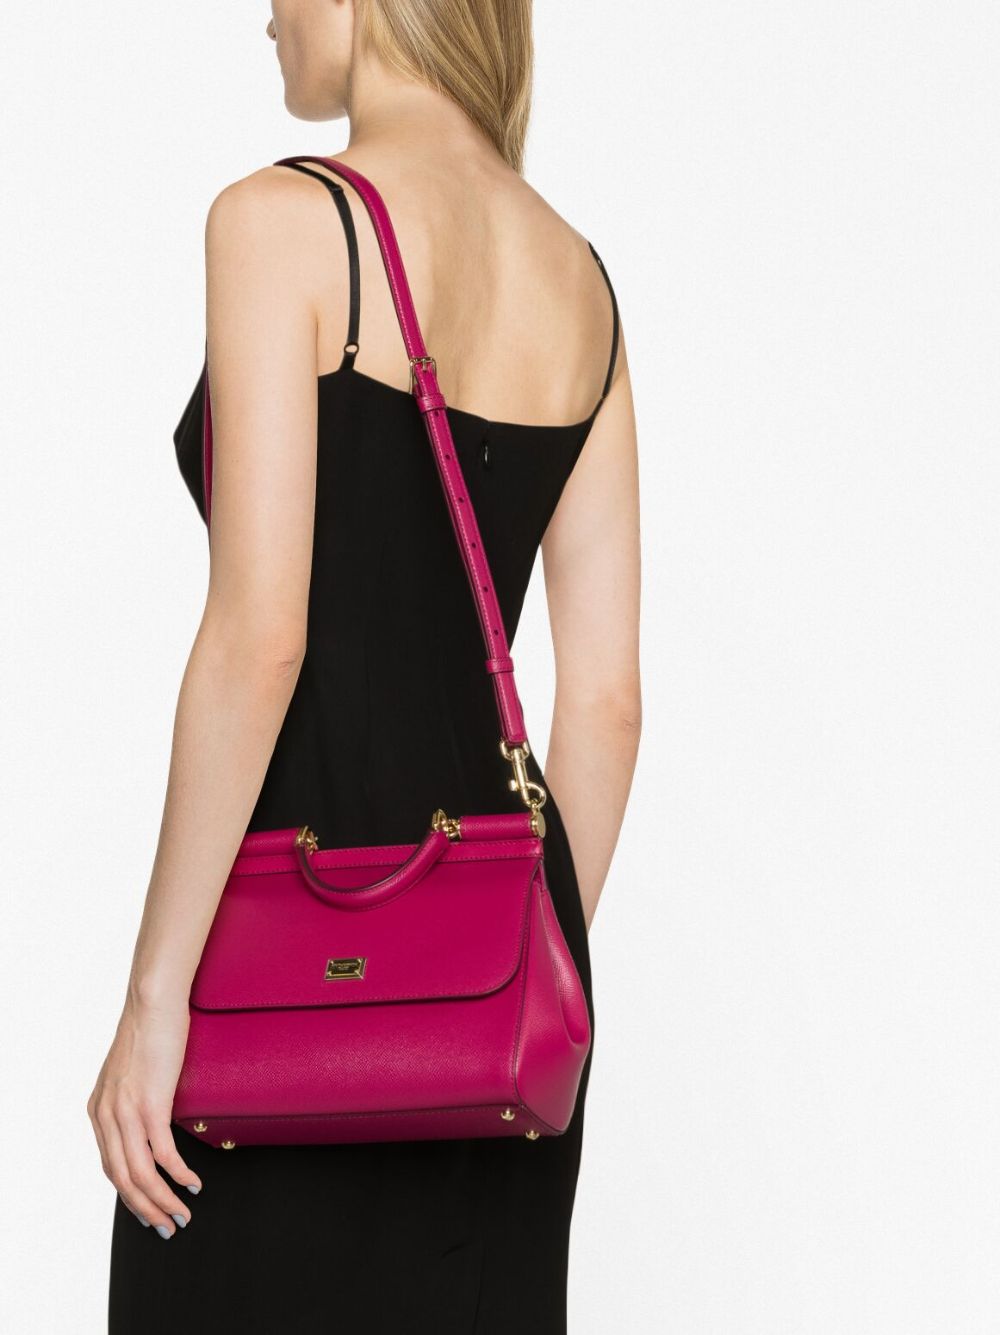 Fuchsia Leather Tote Handbag for Women